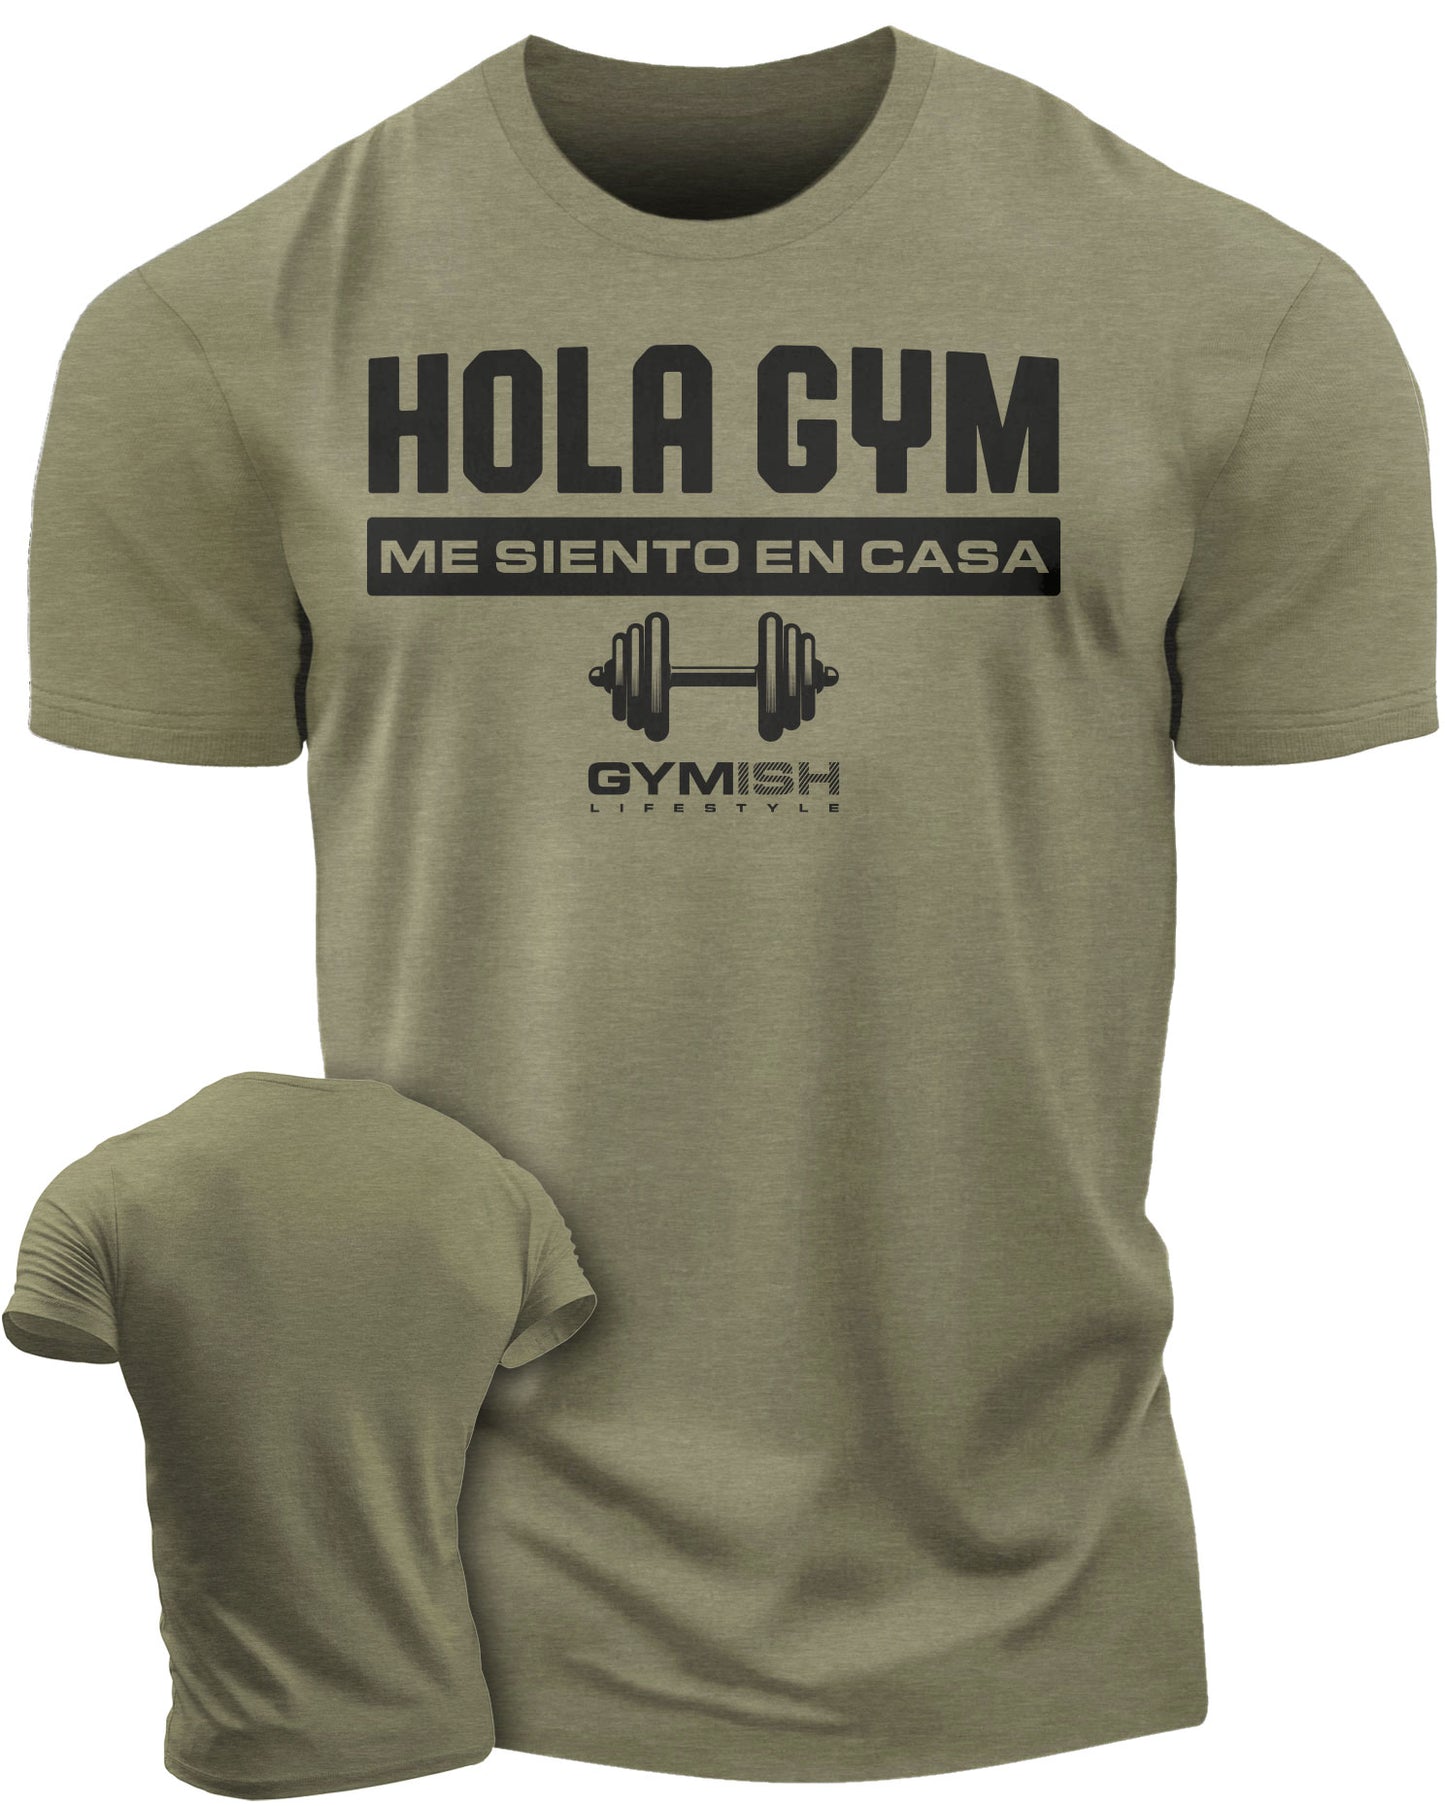 Hola gym, me siento en casa Workout Gym T-Shirt Funny Gym Shirt for Men Camiseta de gimnasio de entrenamiento